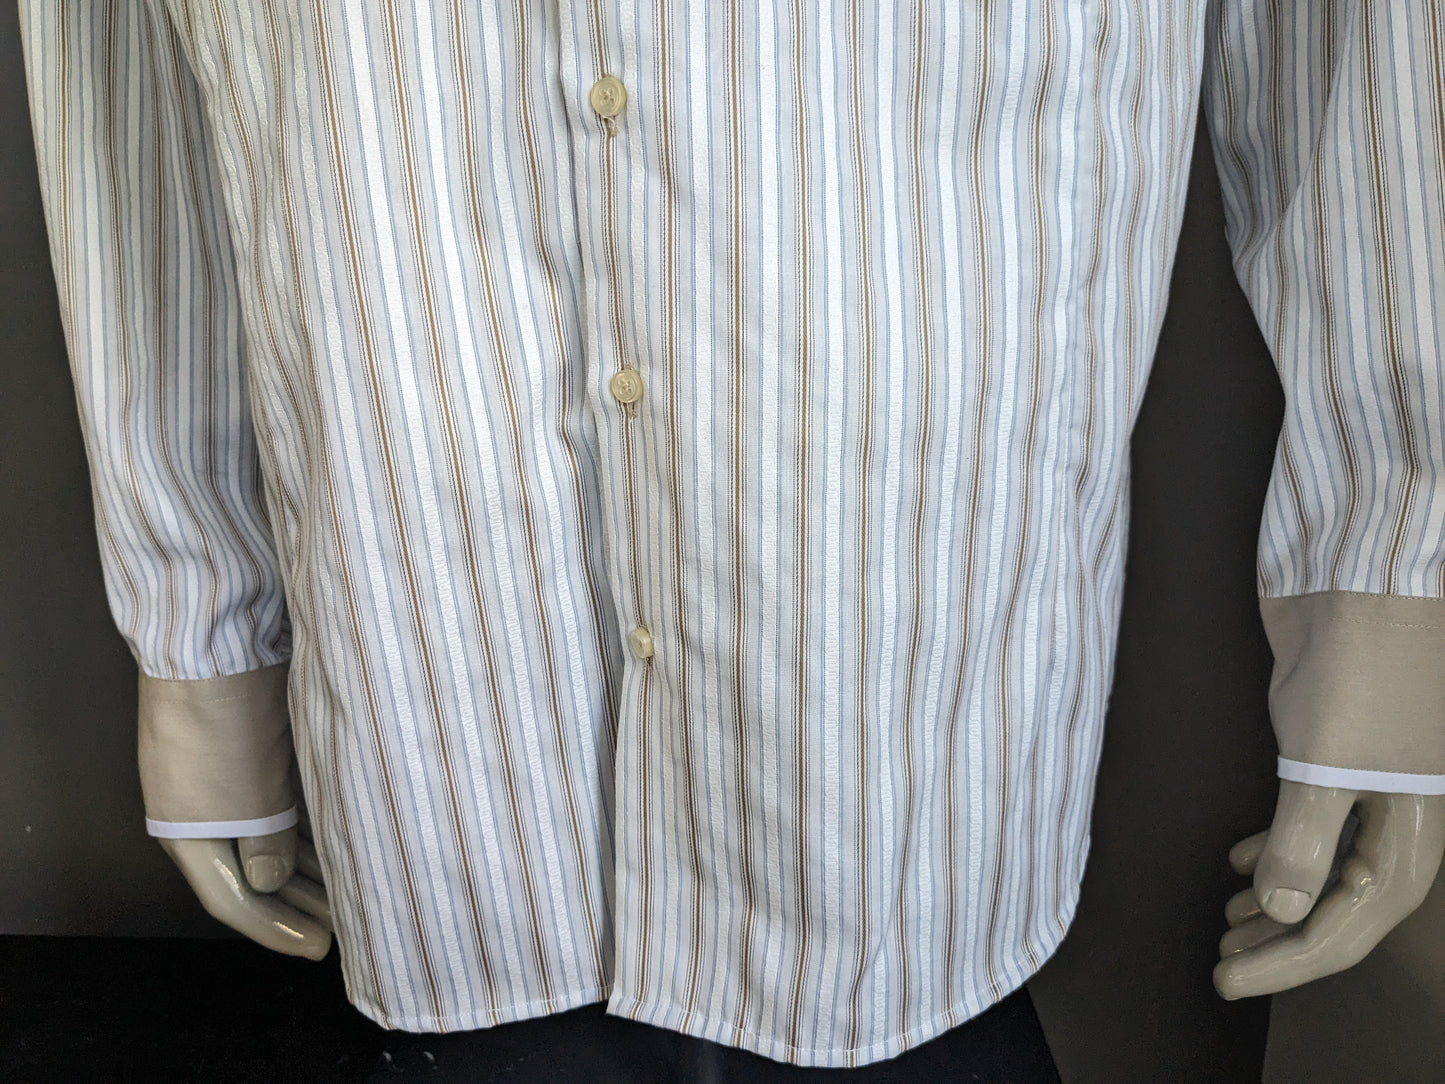 Chemise Turunç avec double col. Brun bleu blanc rayé. Taille xl / xxl.